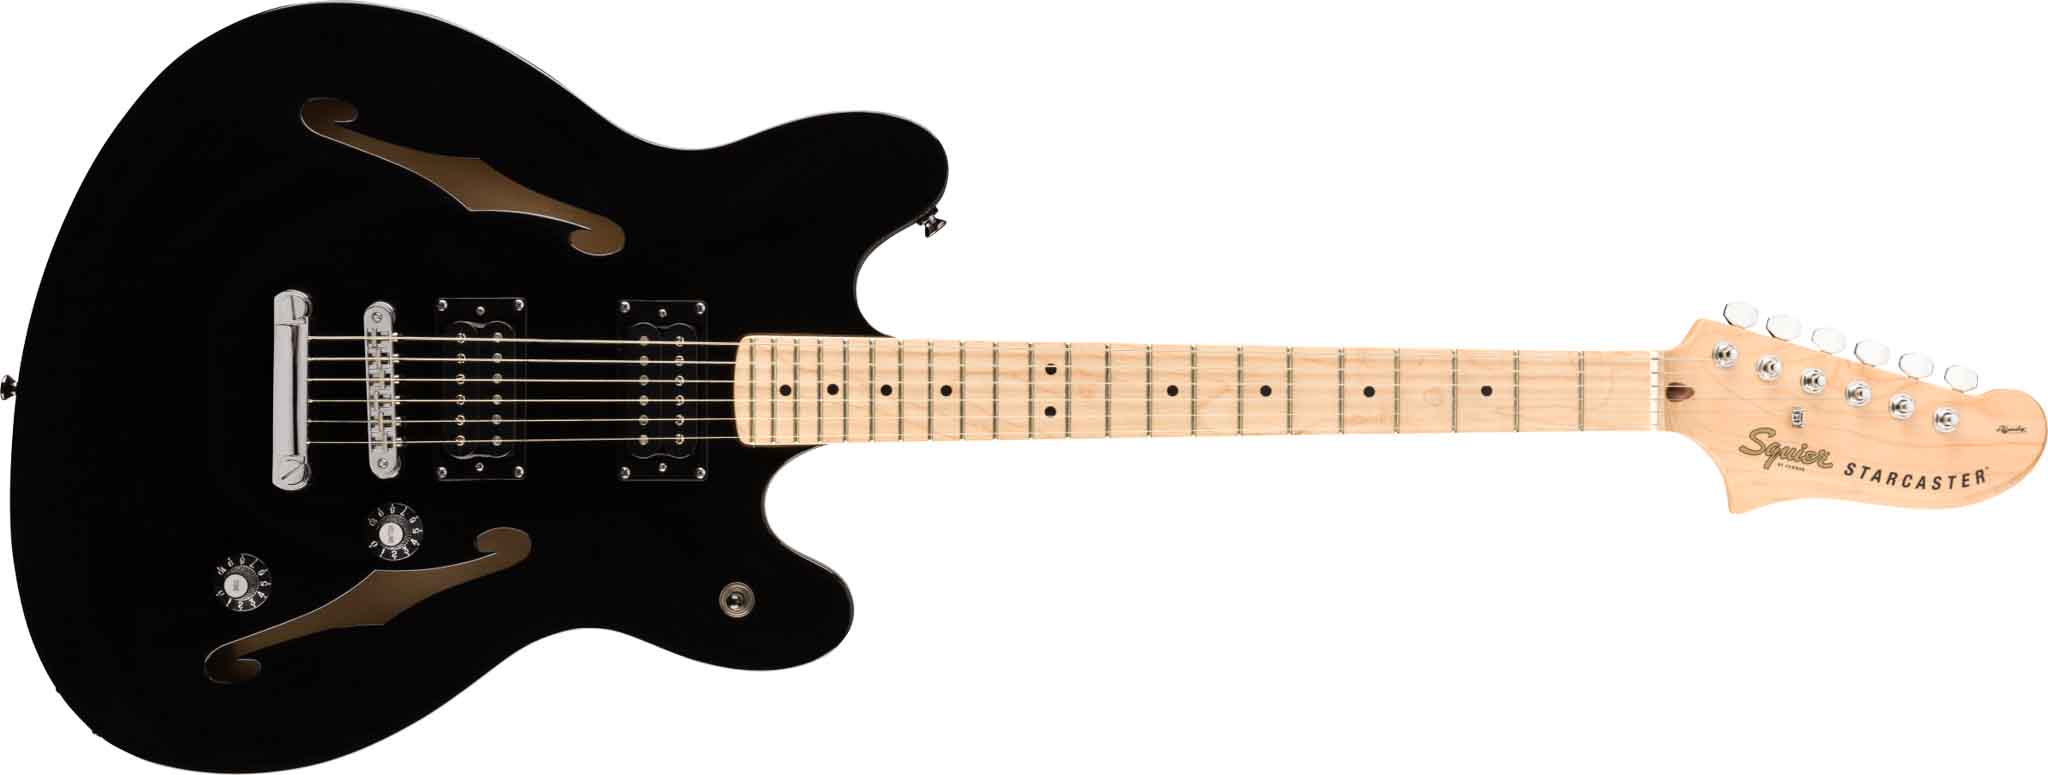 Fender Squier Affinity Starcaster elektrisk gitar